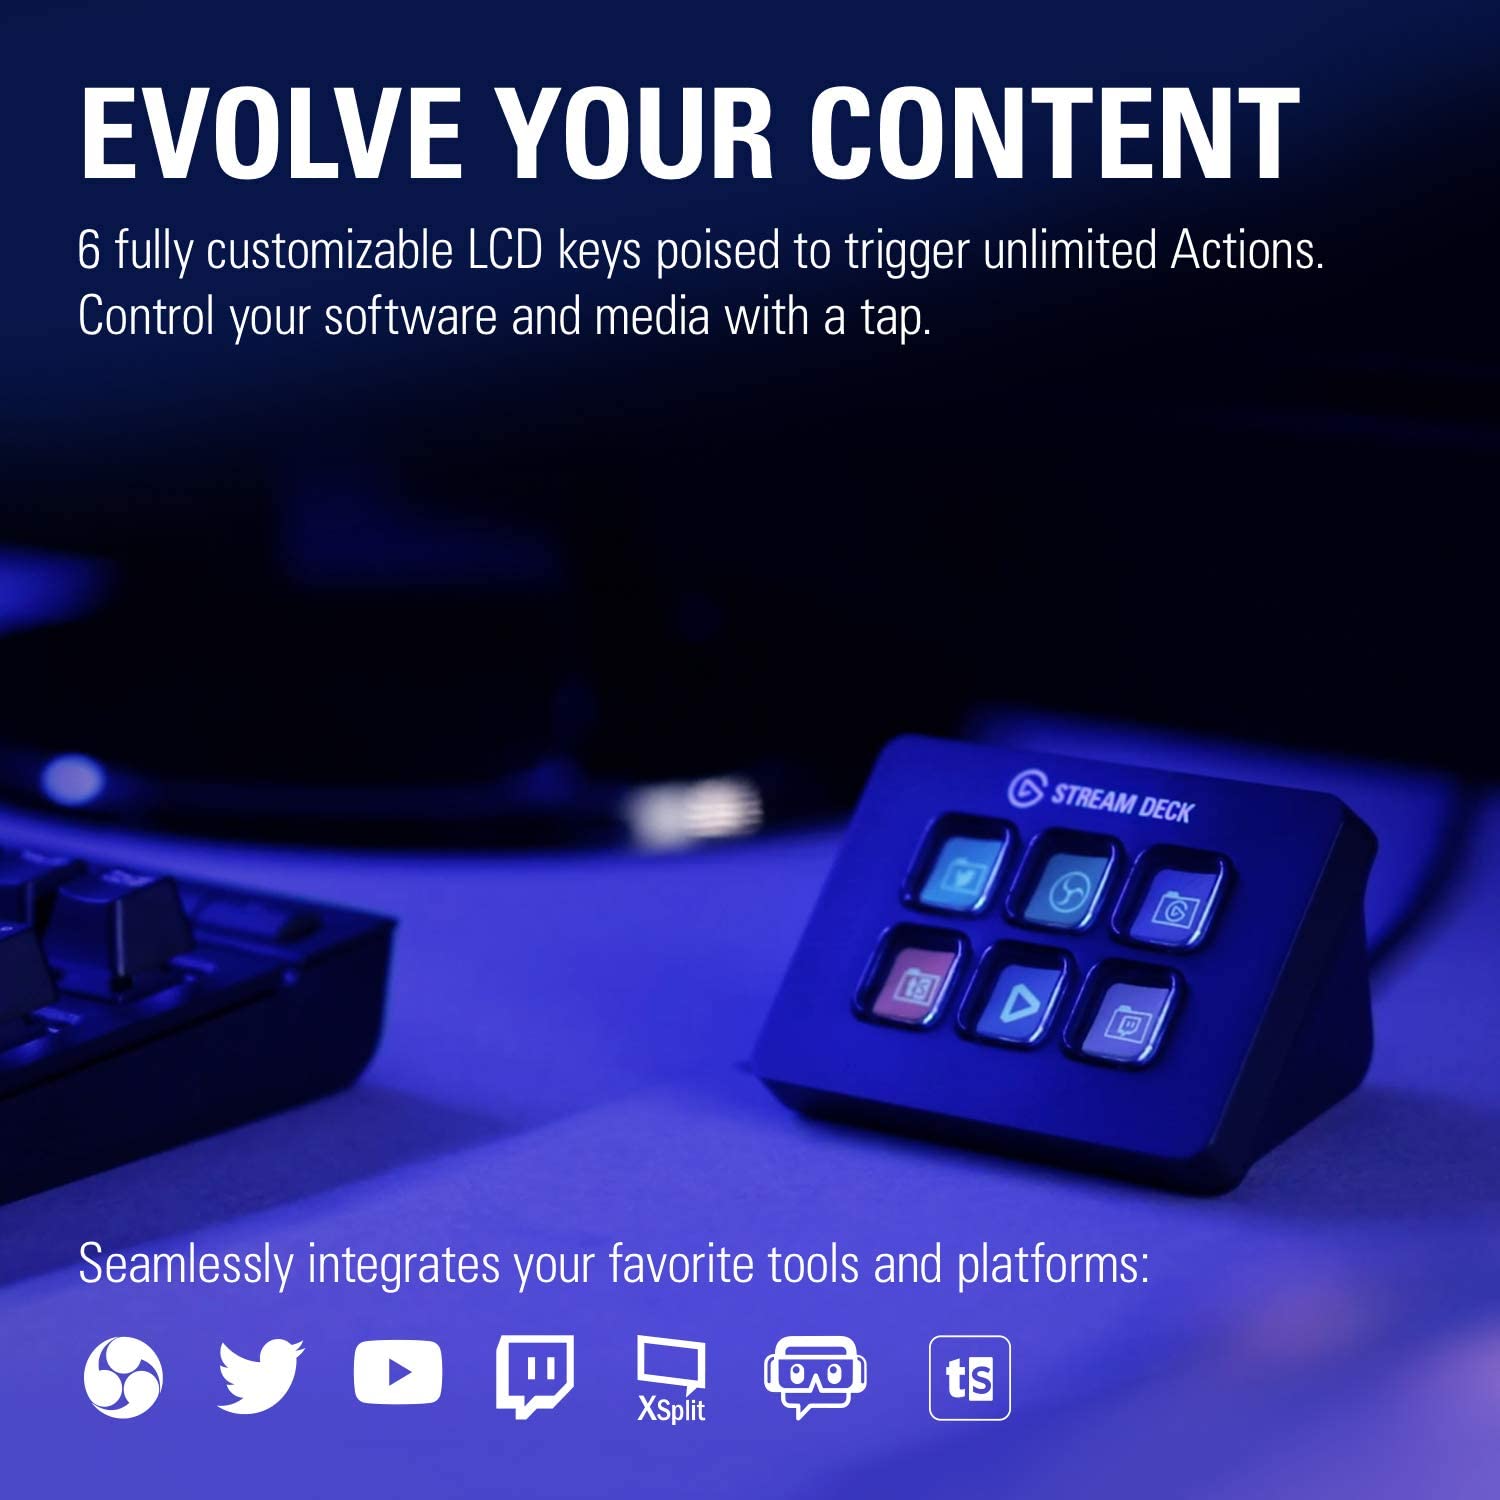 Elgato Stream Deck - Live Content Creation Controller 